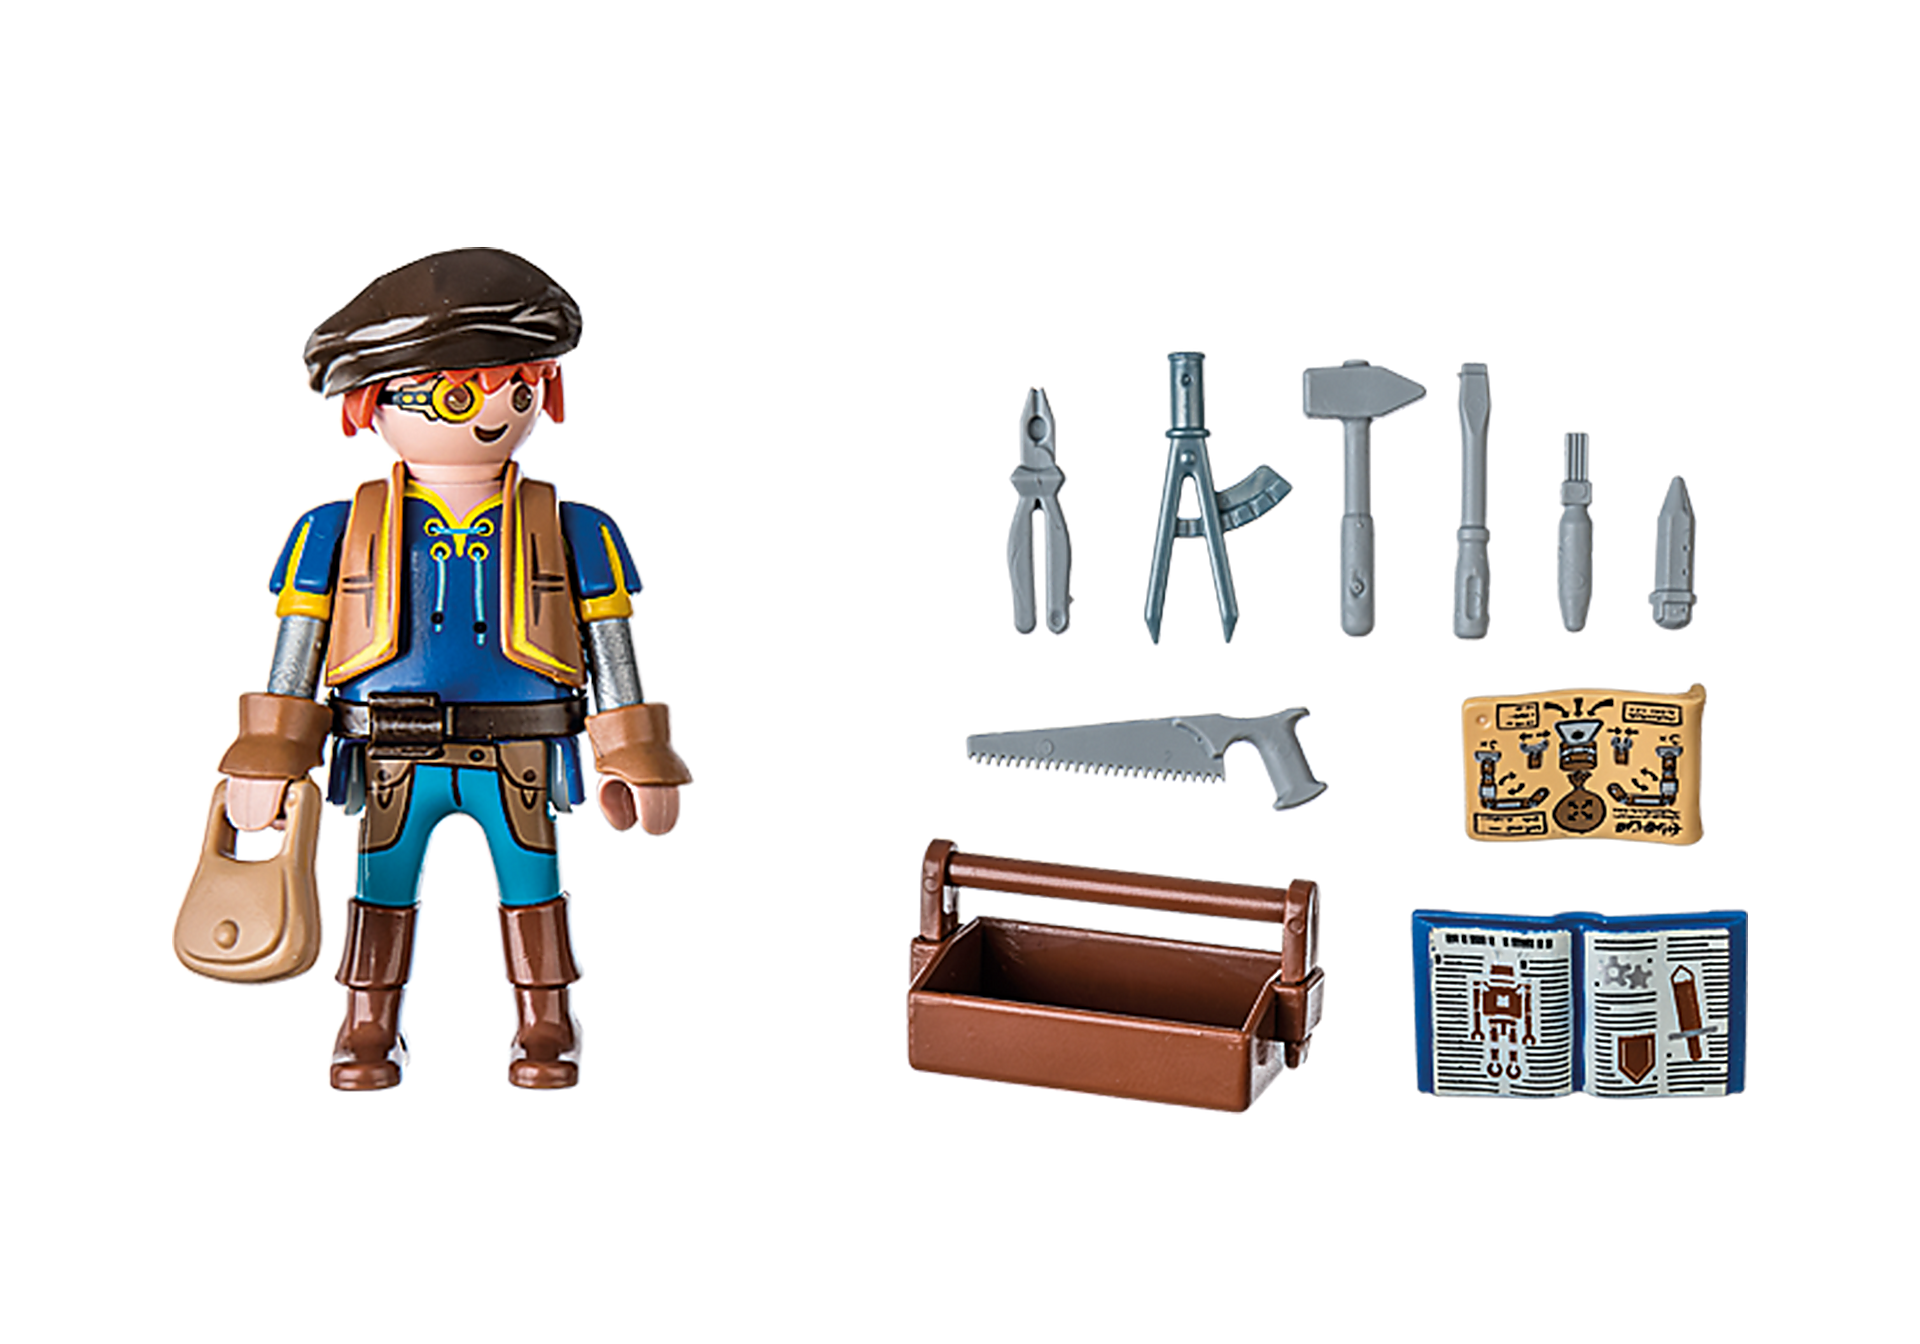 Playmobil Novelmore: Dario con herramientas 71302